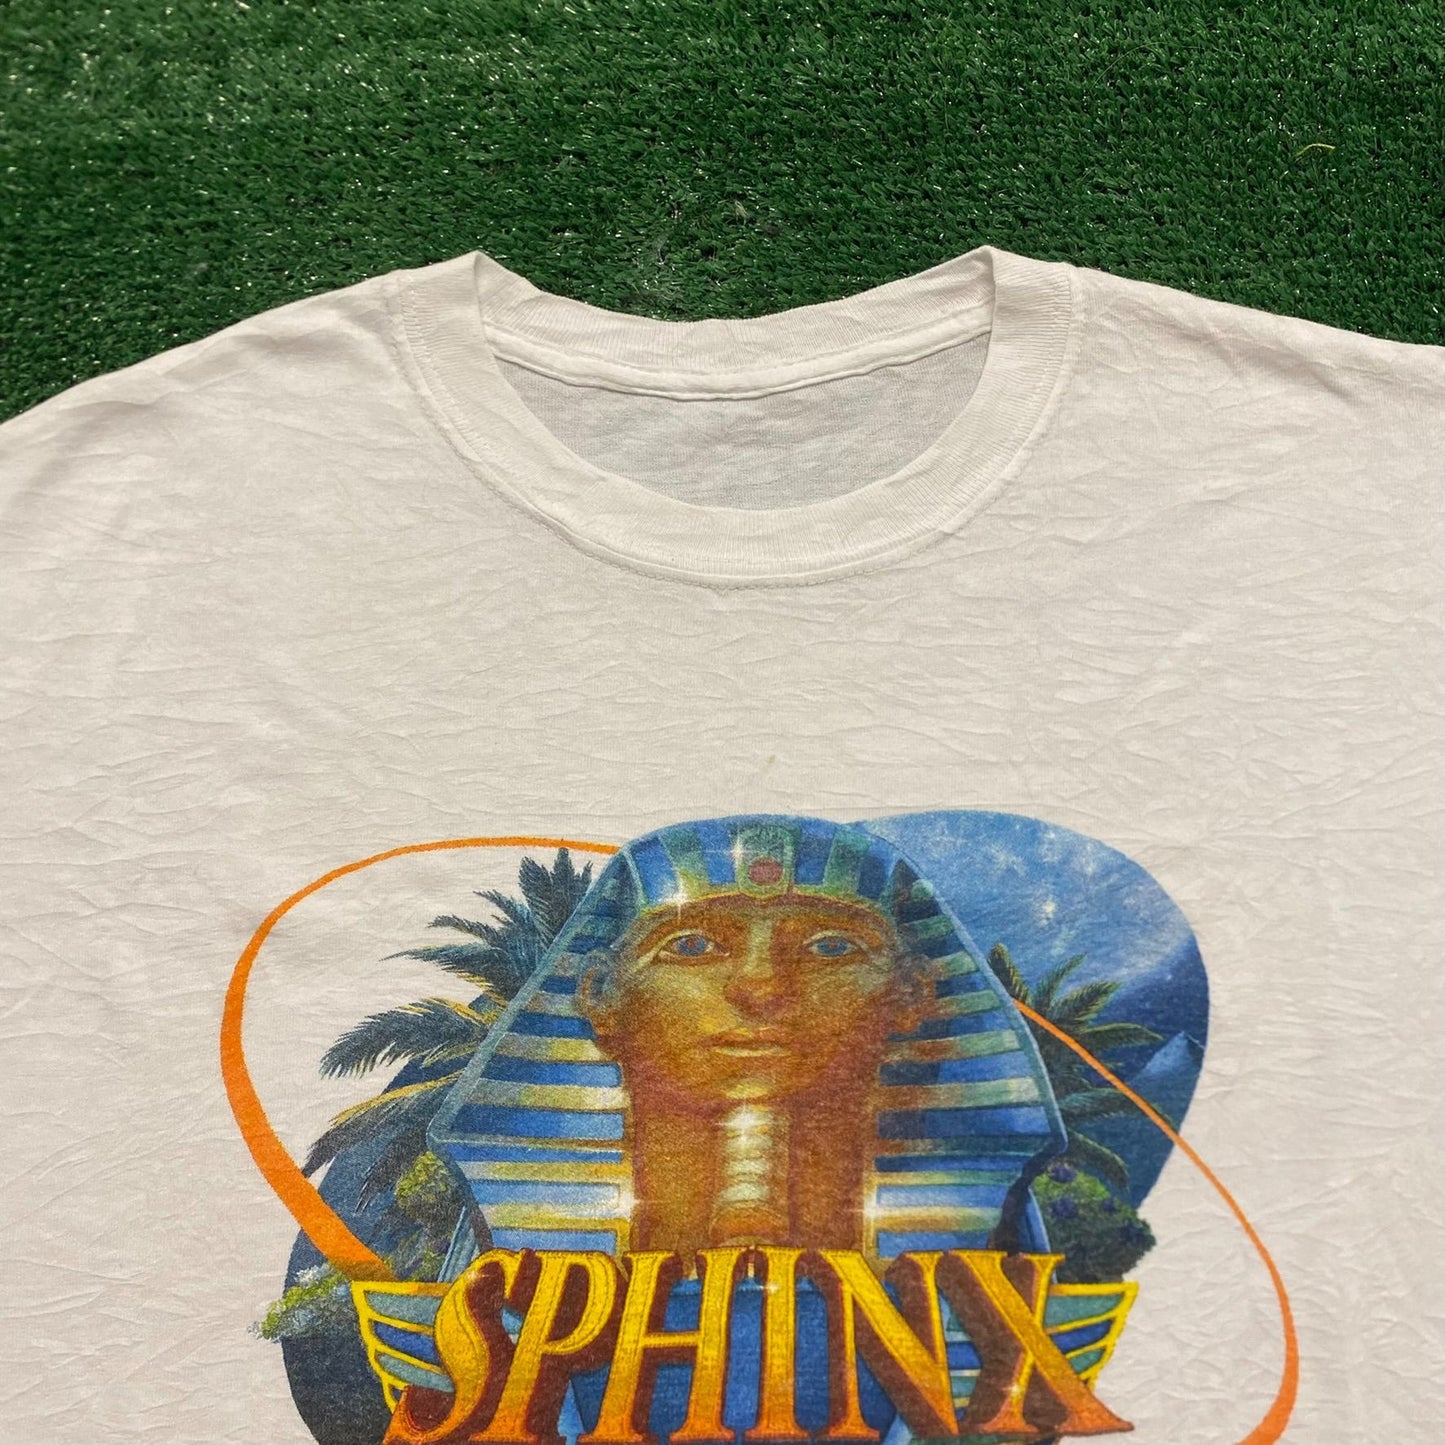 Sphinx 4D Video Slots Vintage Casino Gambling T-Shirt